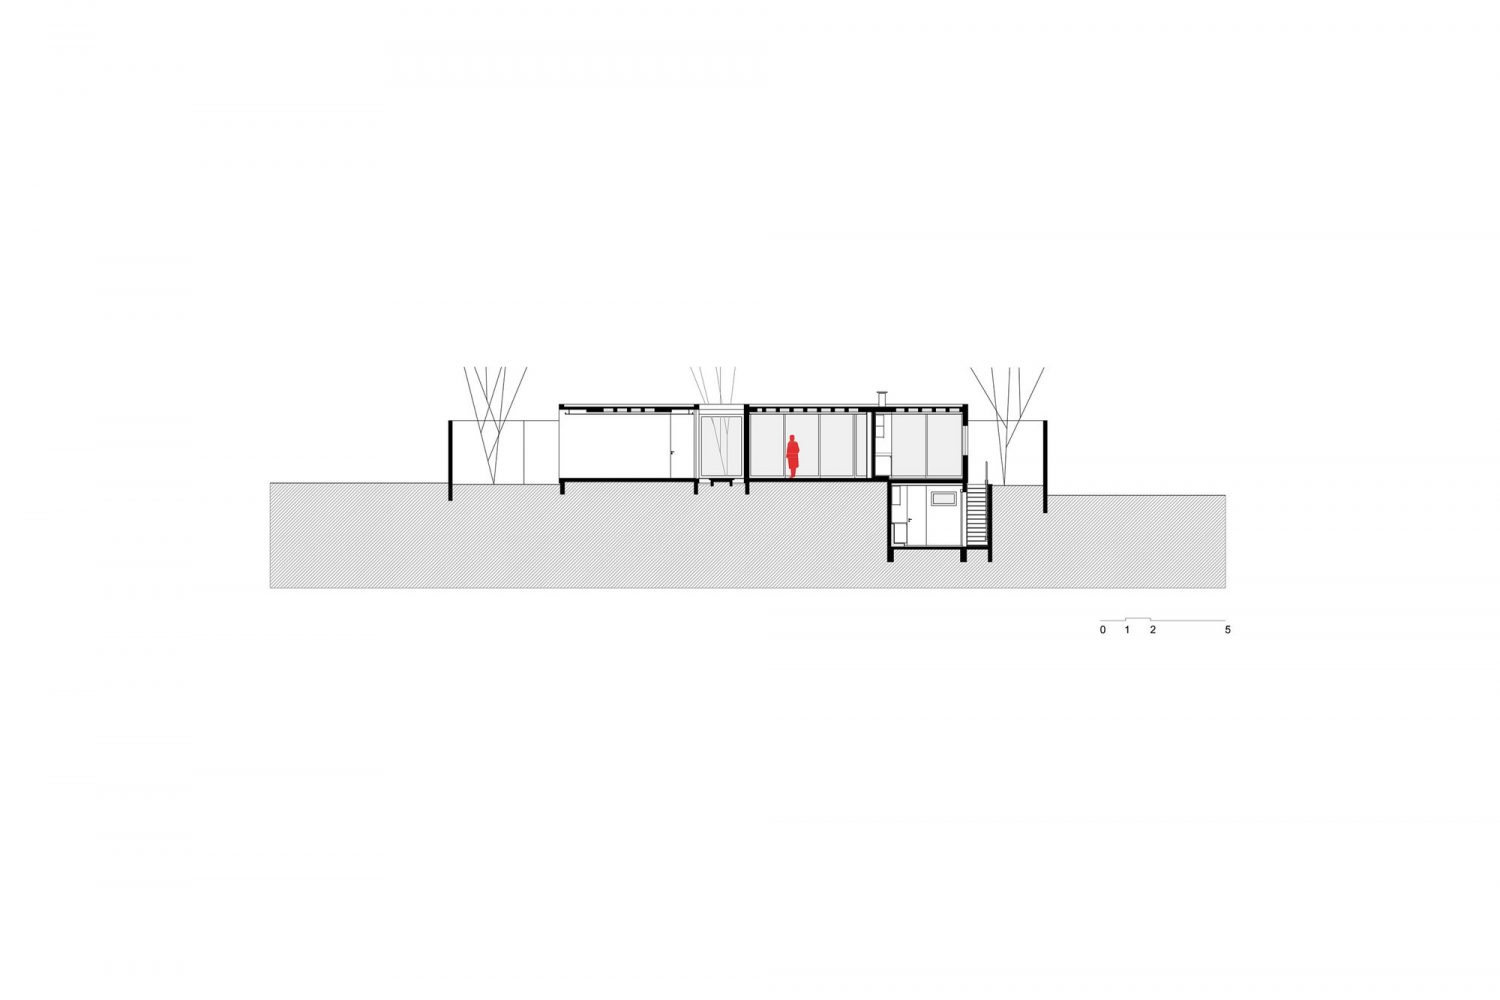 Güths House by ArqBr Arquitetura e Urbanismo